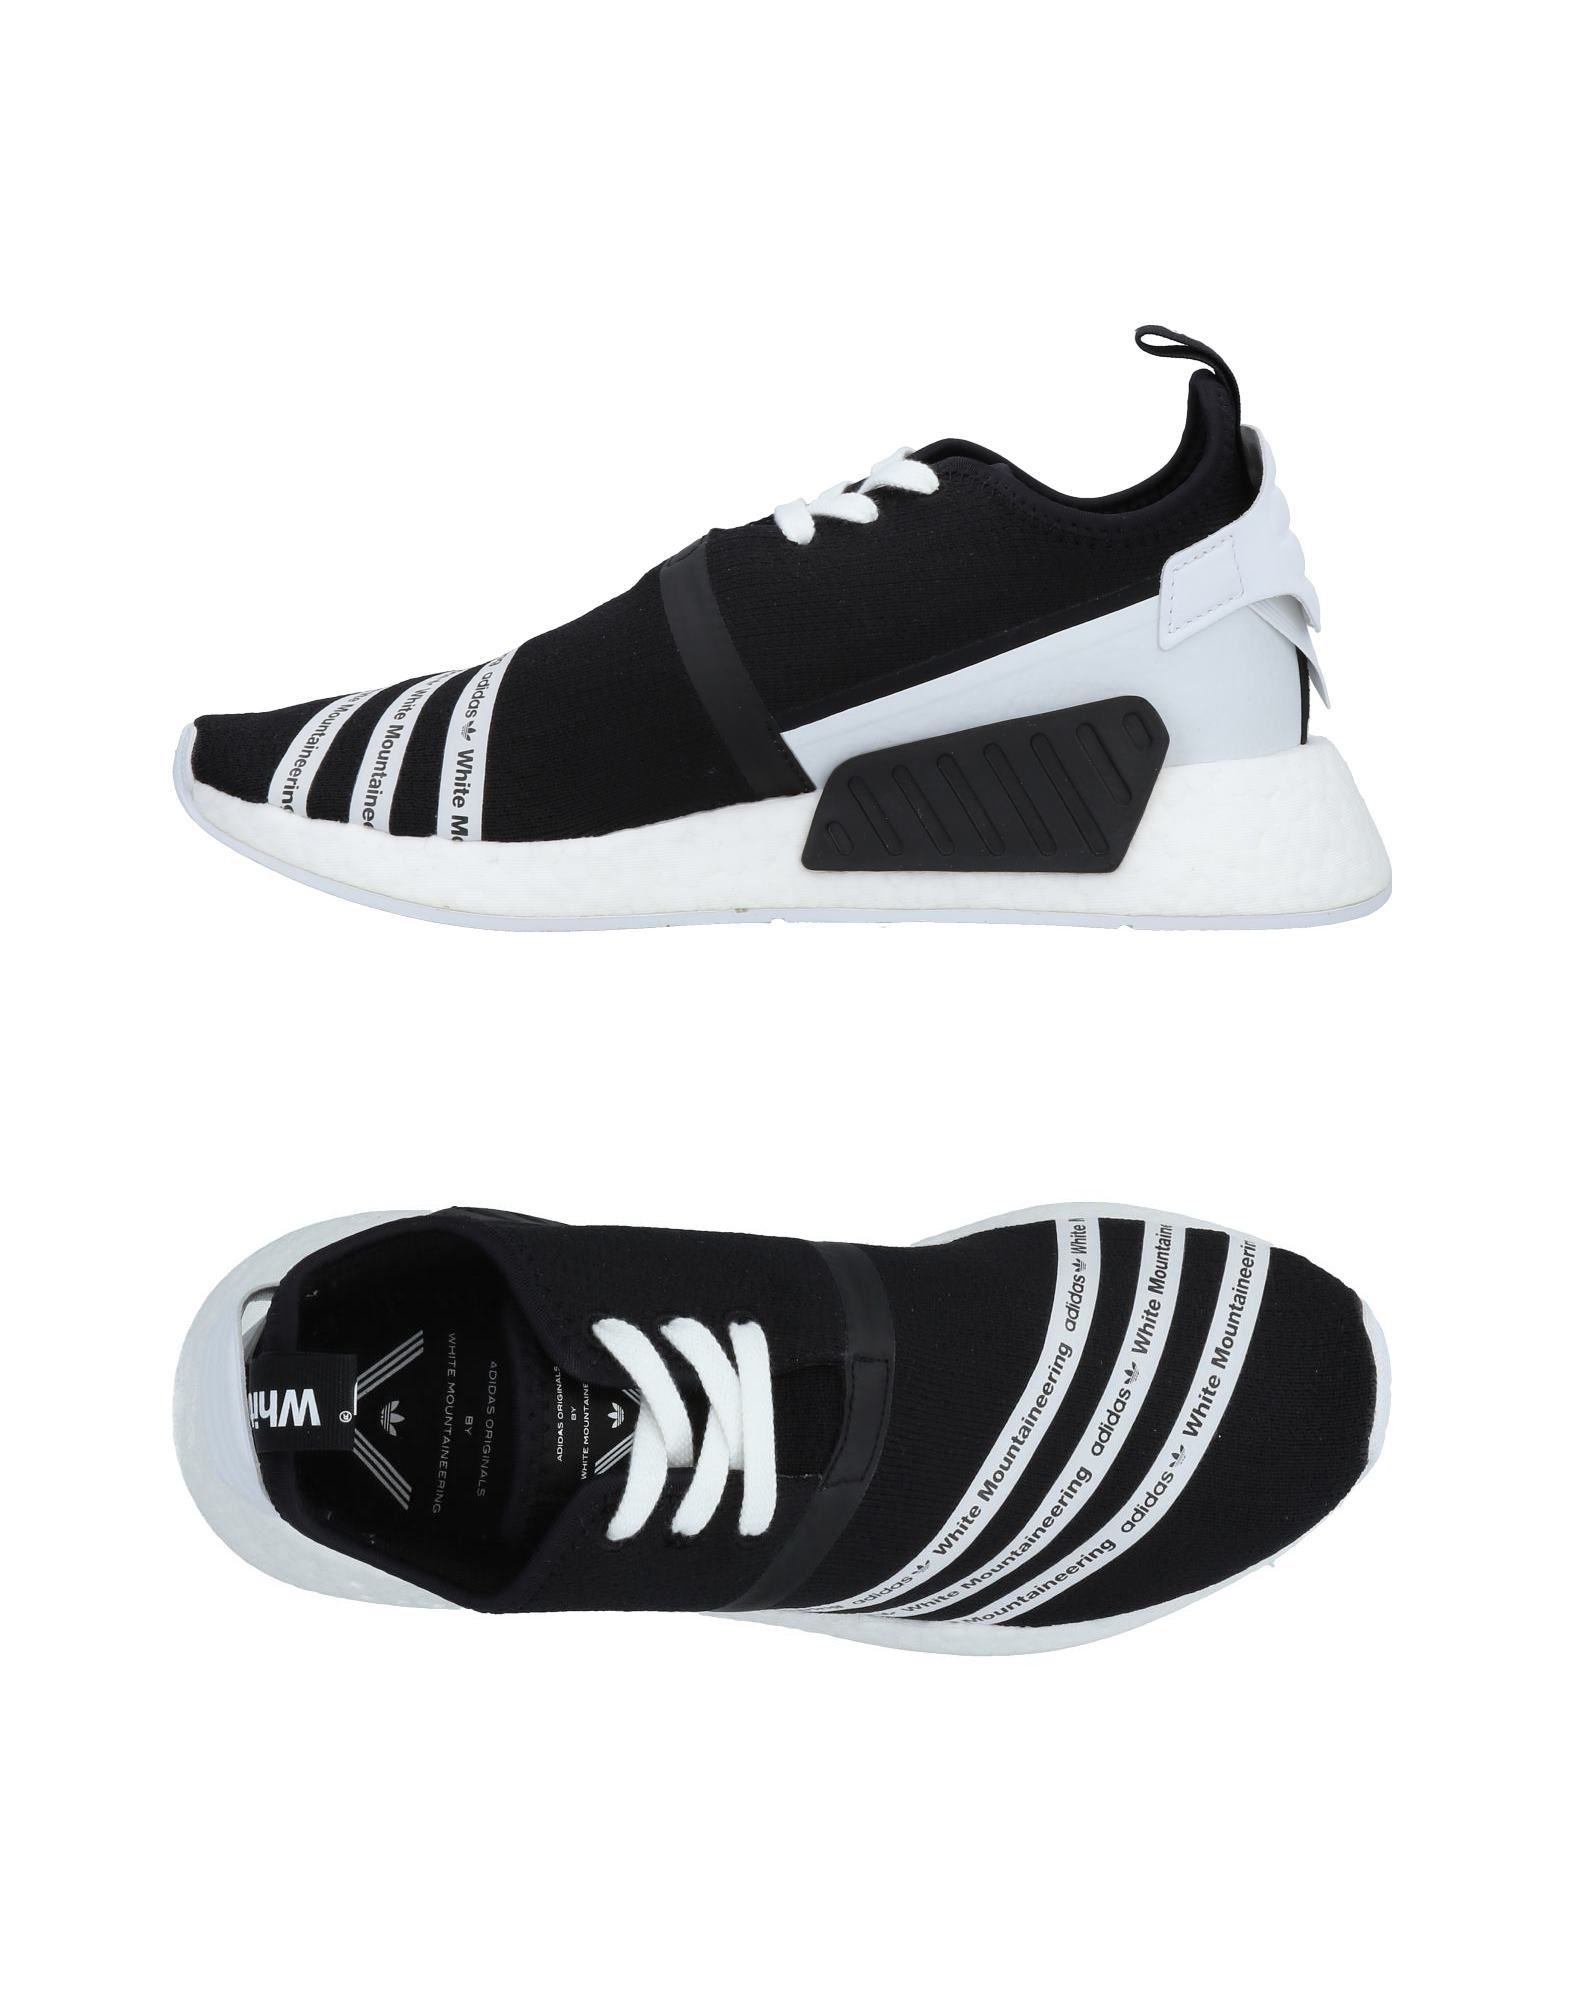 ADIDAS X WHITE MOUNTAINEERING Sneakers,11493676KL 17